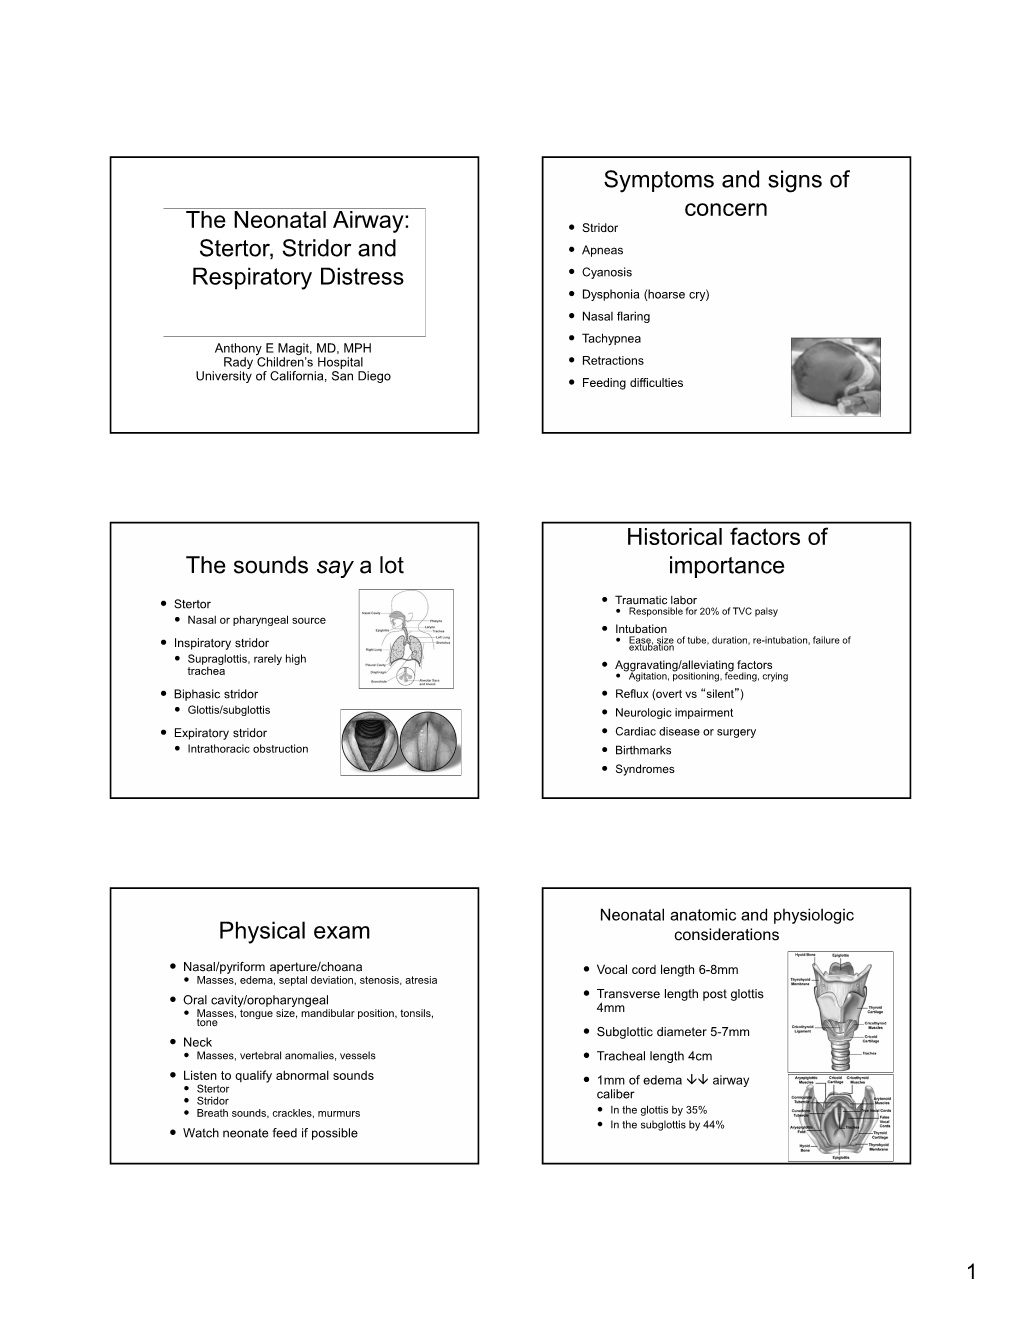 The Neonatal Airway: Stertor, Stridor and Respiratory Distress Symptoms